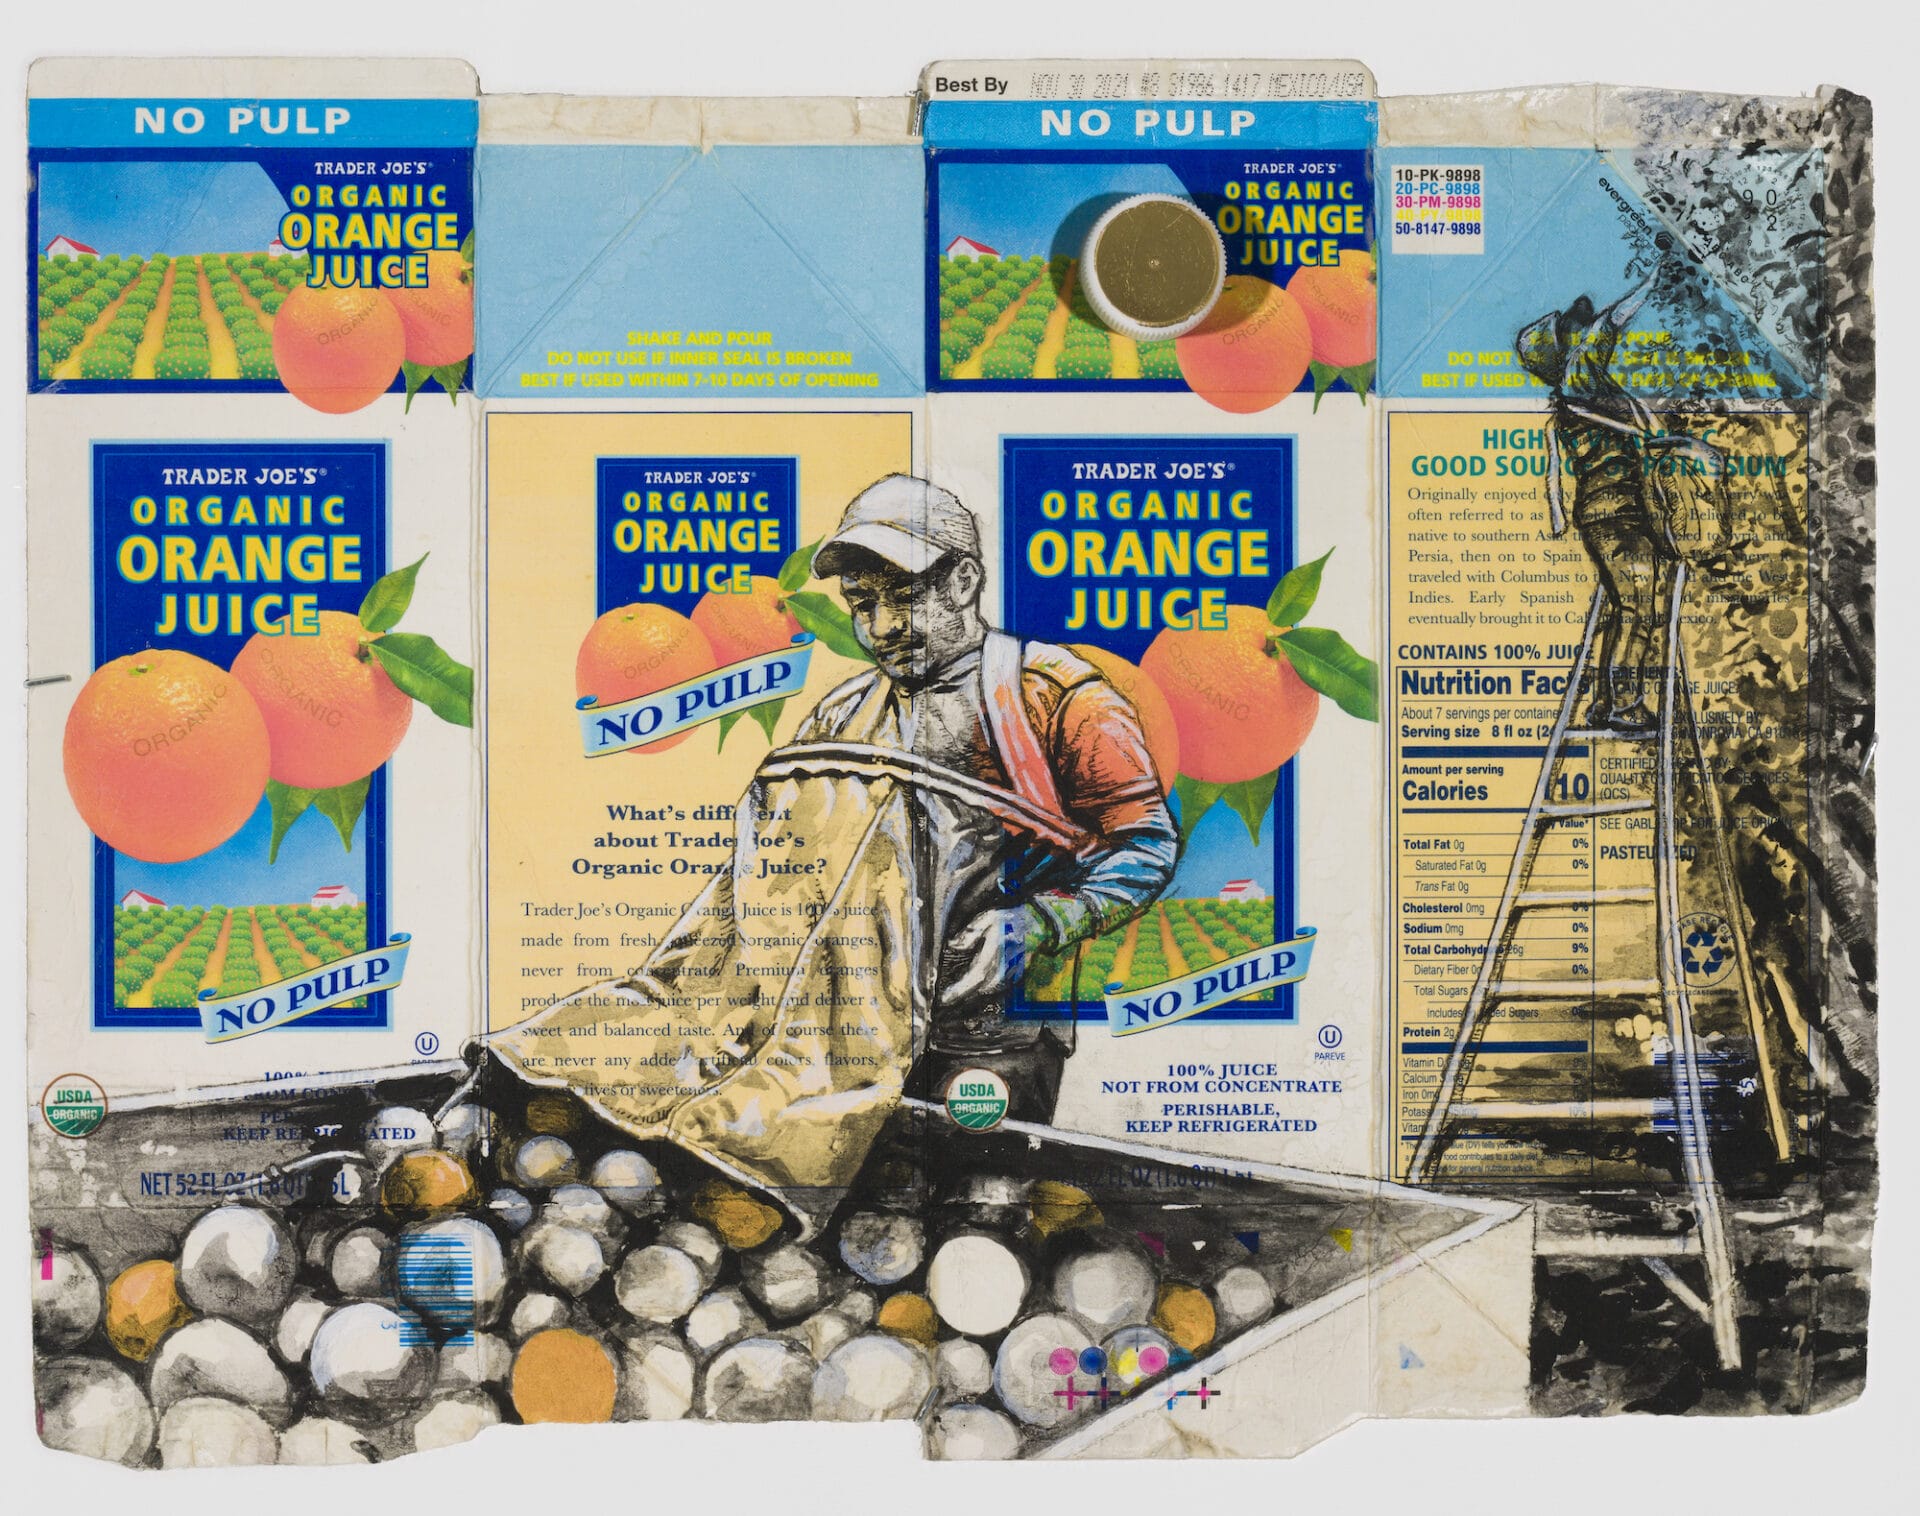 A portrait of a farmworker unloading a bag of produce into a bin, drawn on an orange juice carton.